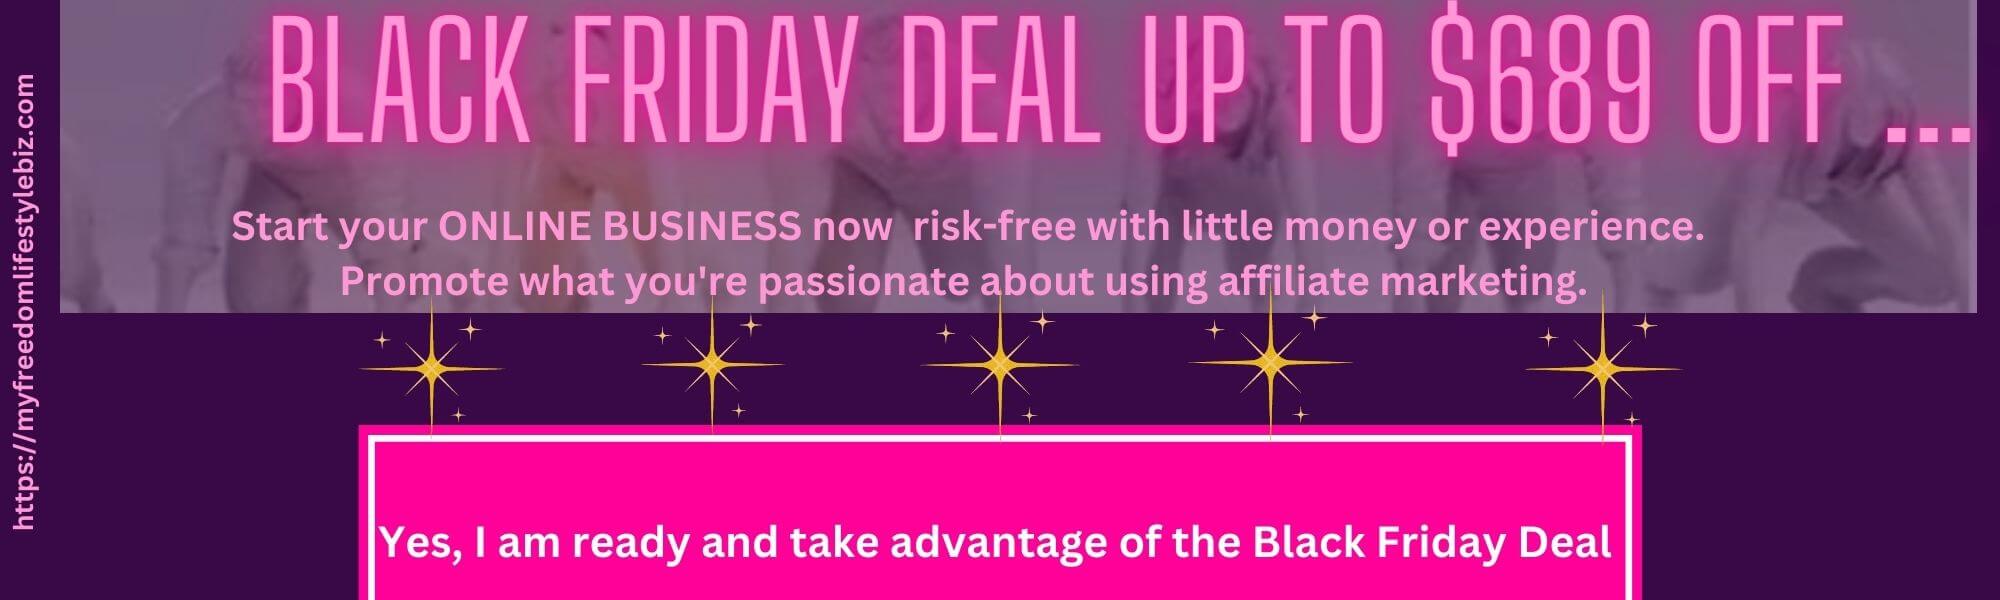 Black Friday deals wealthy affiliate online business